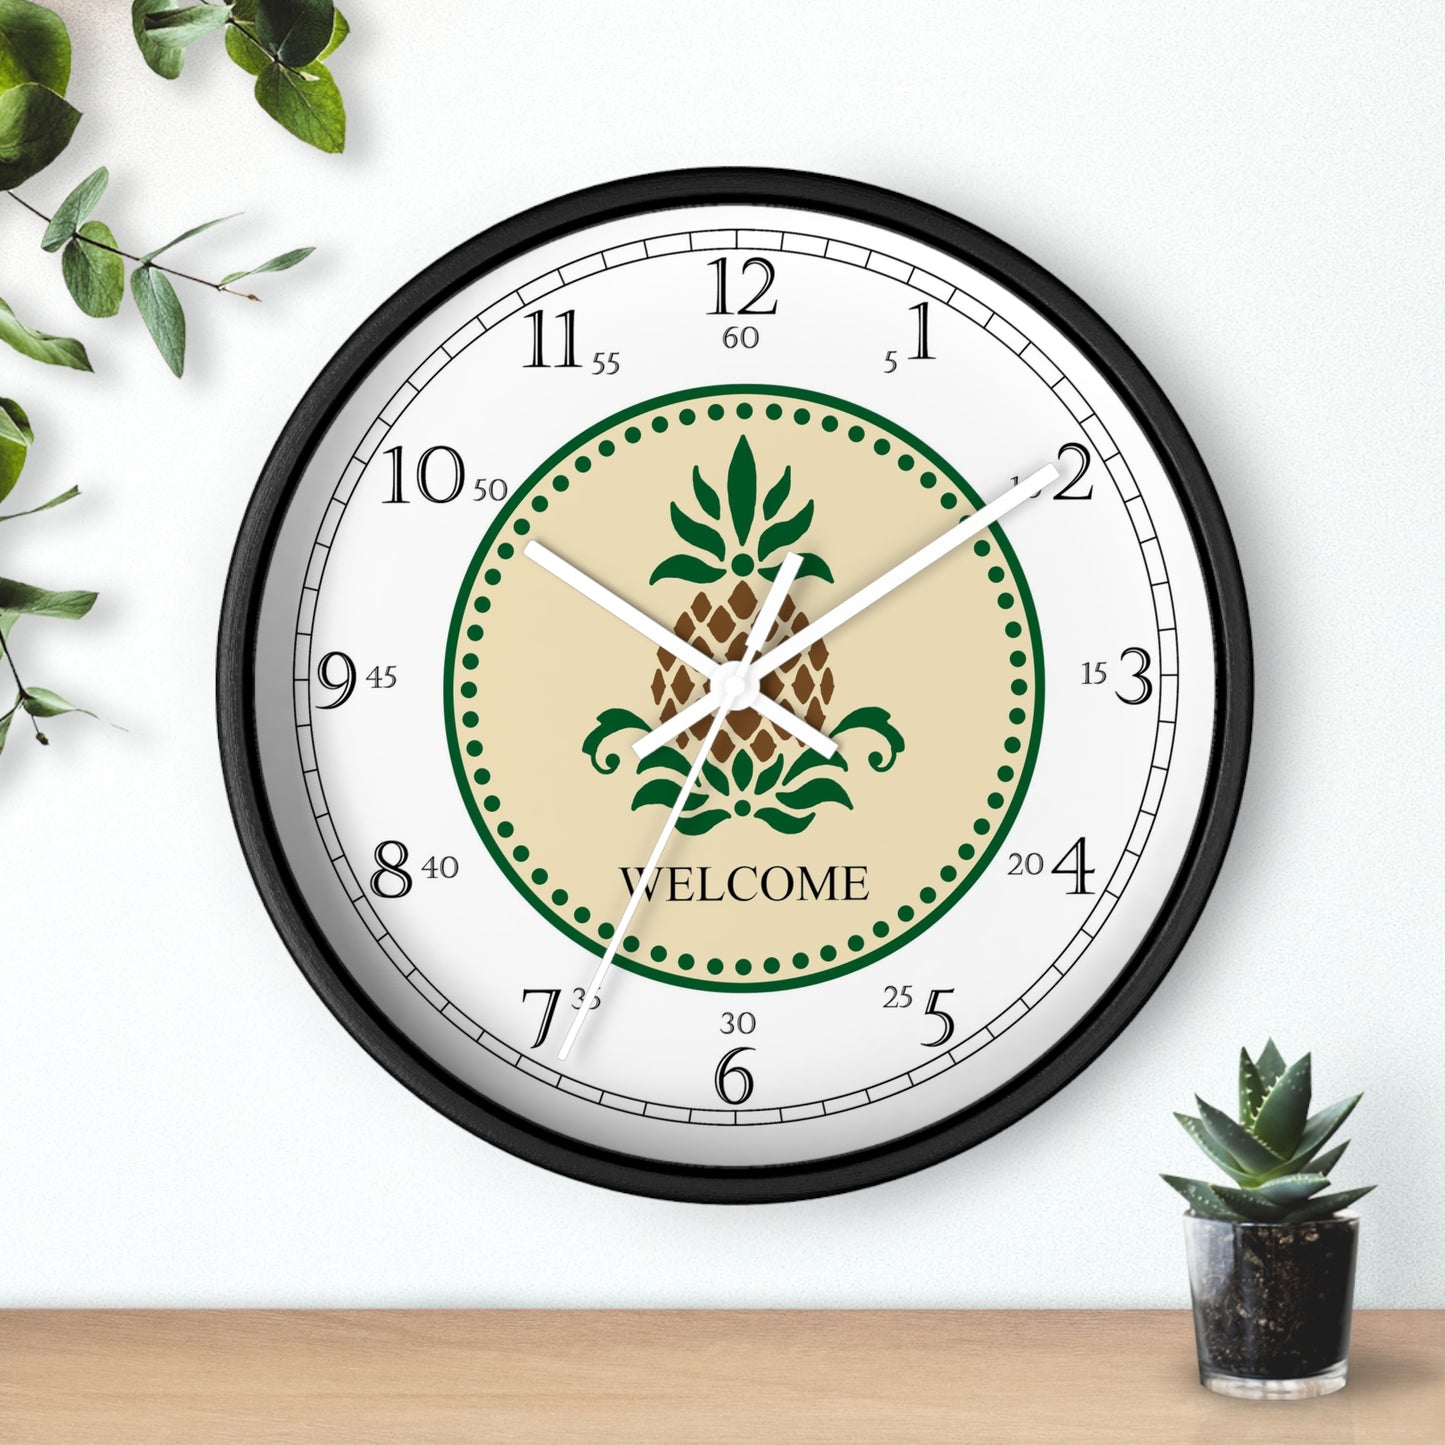 Welcome Folk Art Design English Numeral Clock